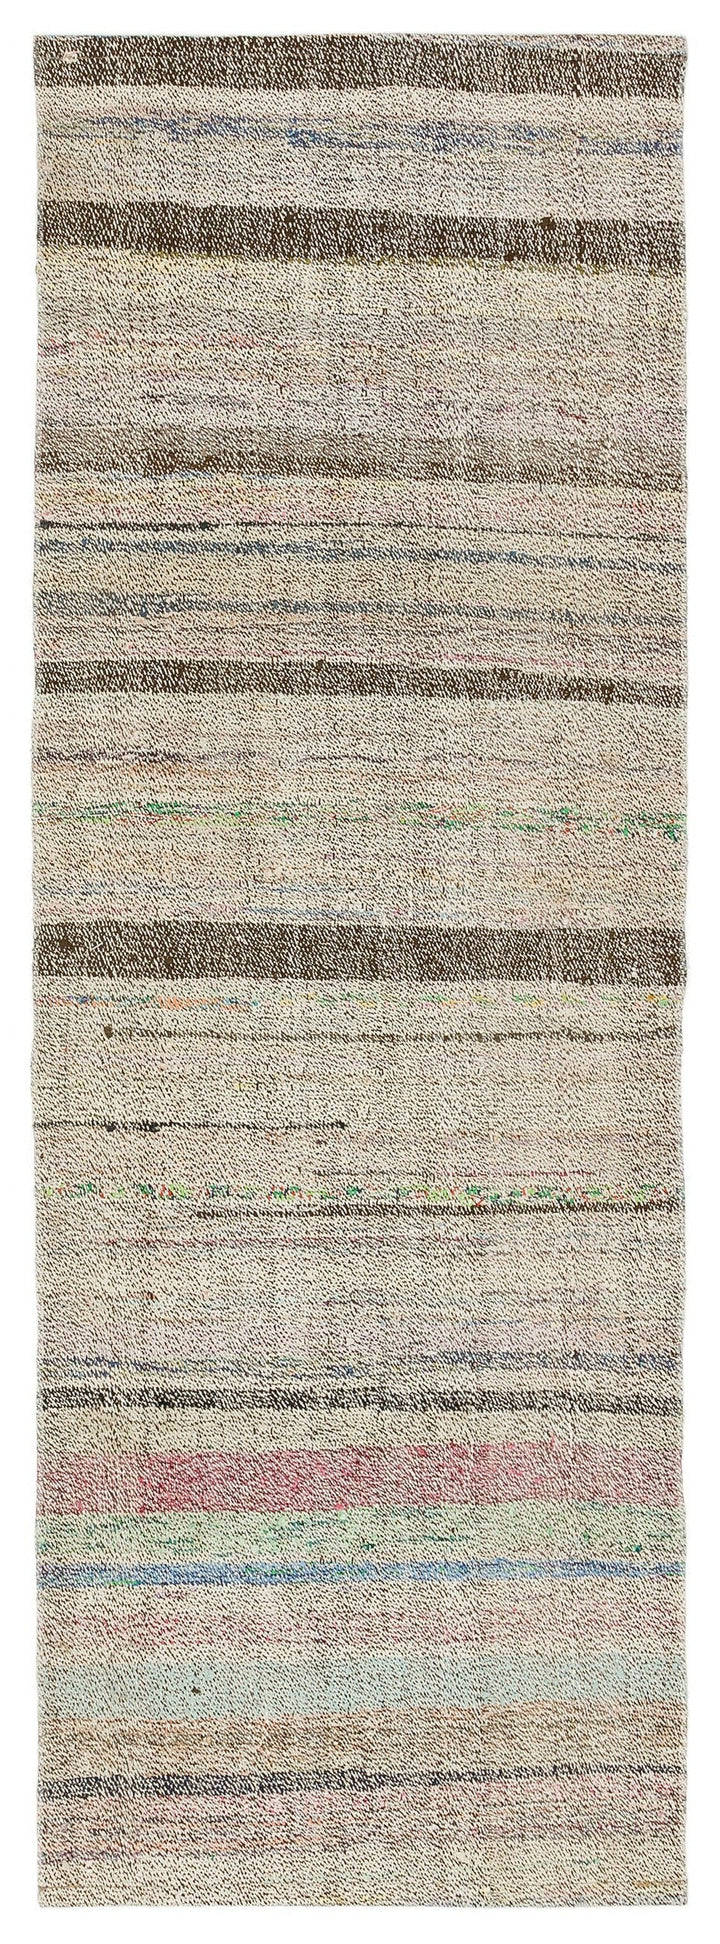 Cretan Beige Striped Wool Hand-Woven Carpet 061 x 175